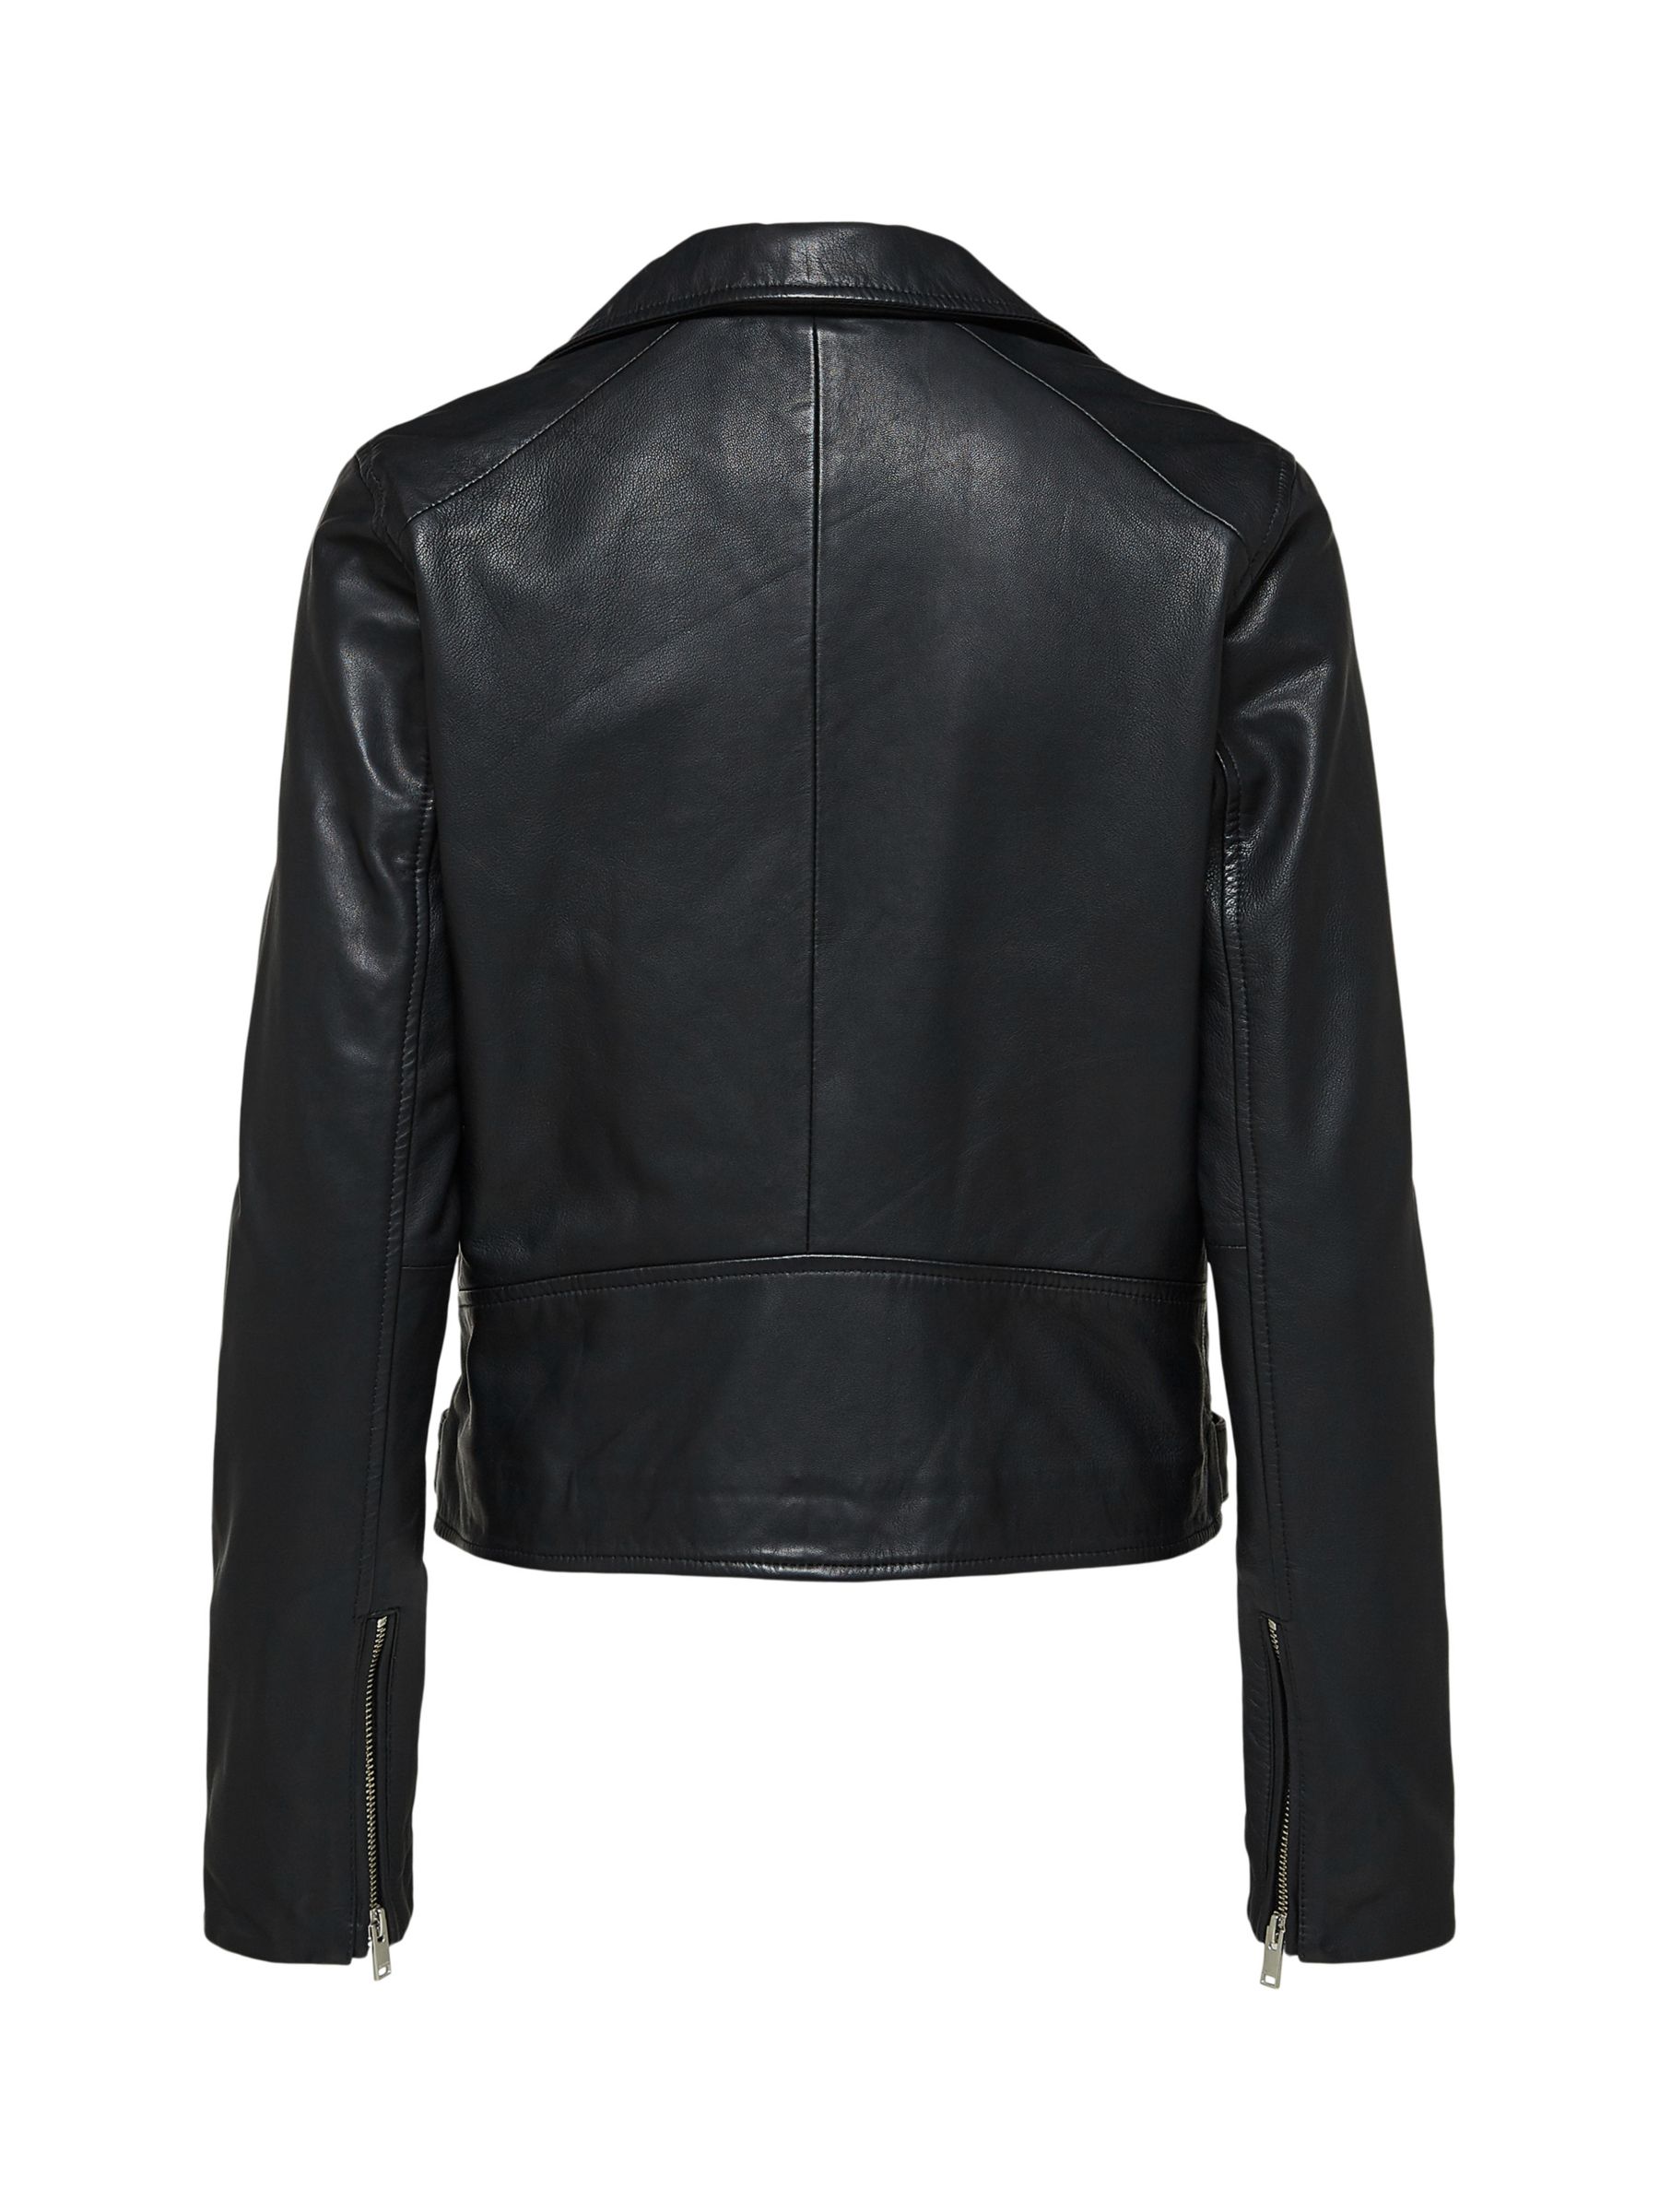 SELECTED FEMME Leather Jacket, Black at John Lewis & Partners